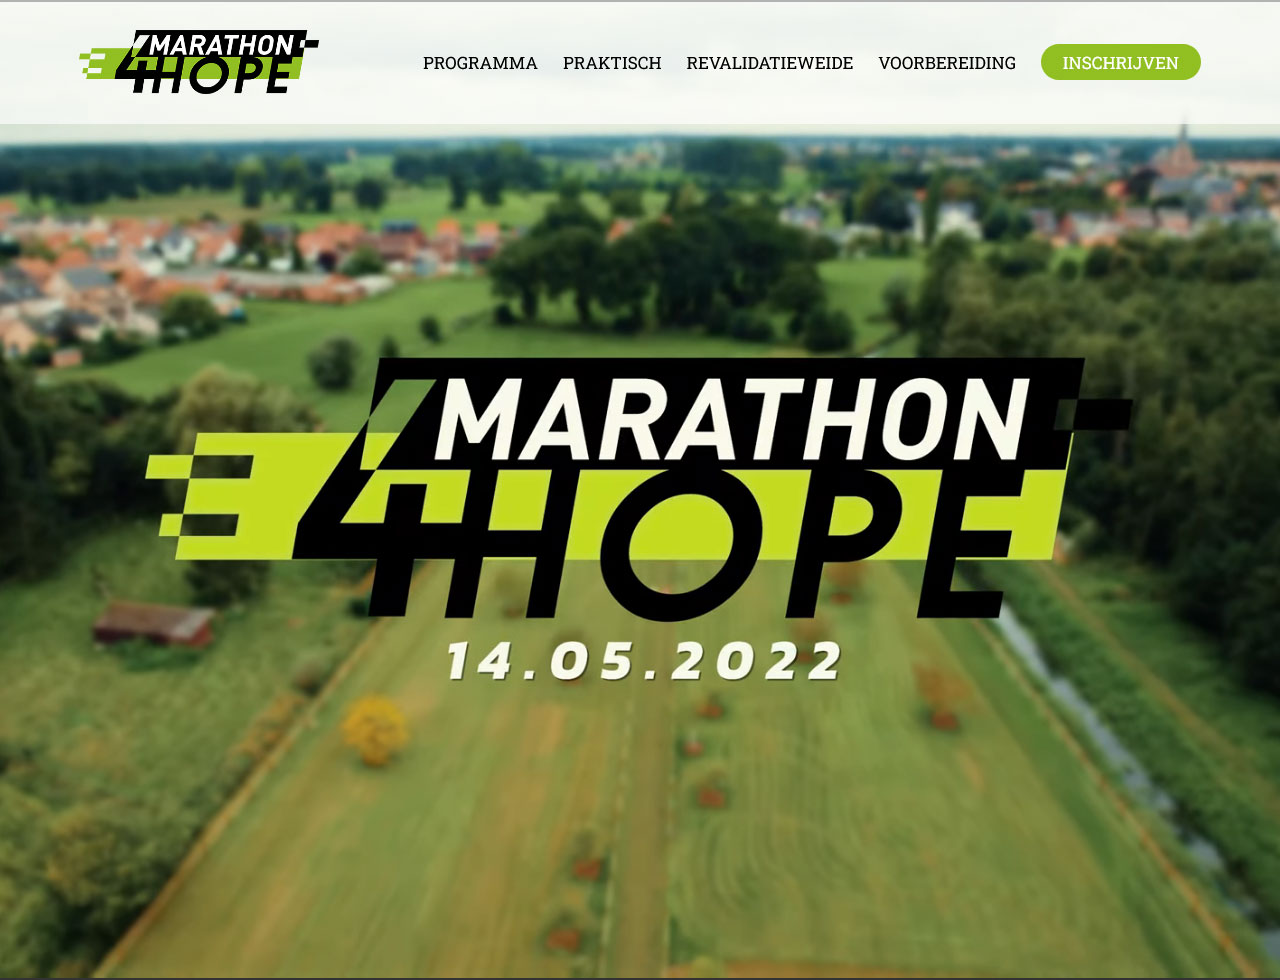 Marathon 4 hope